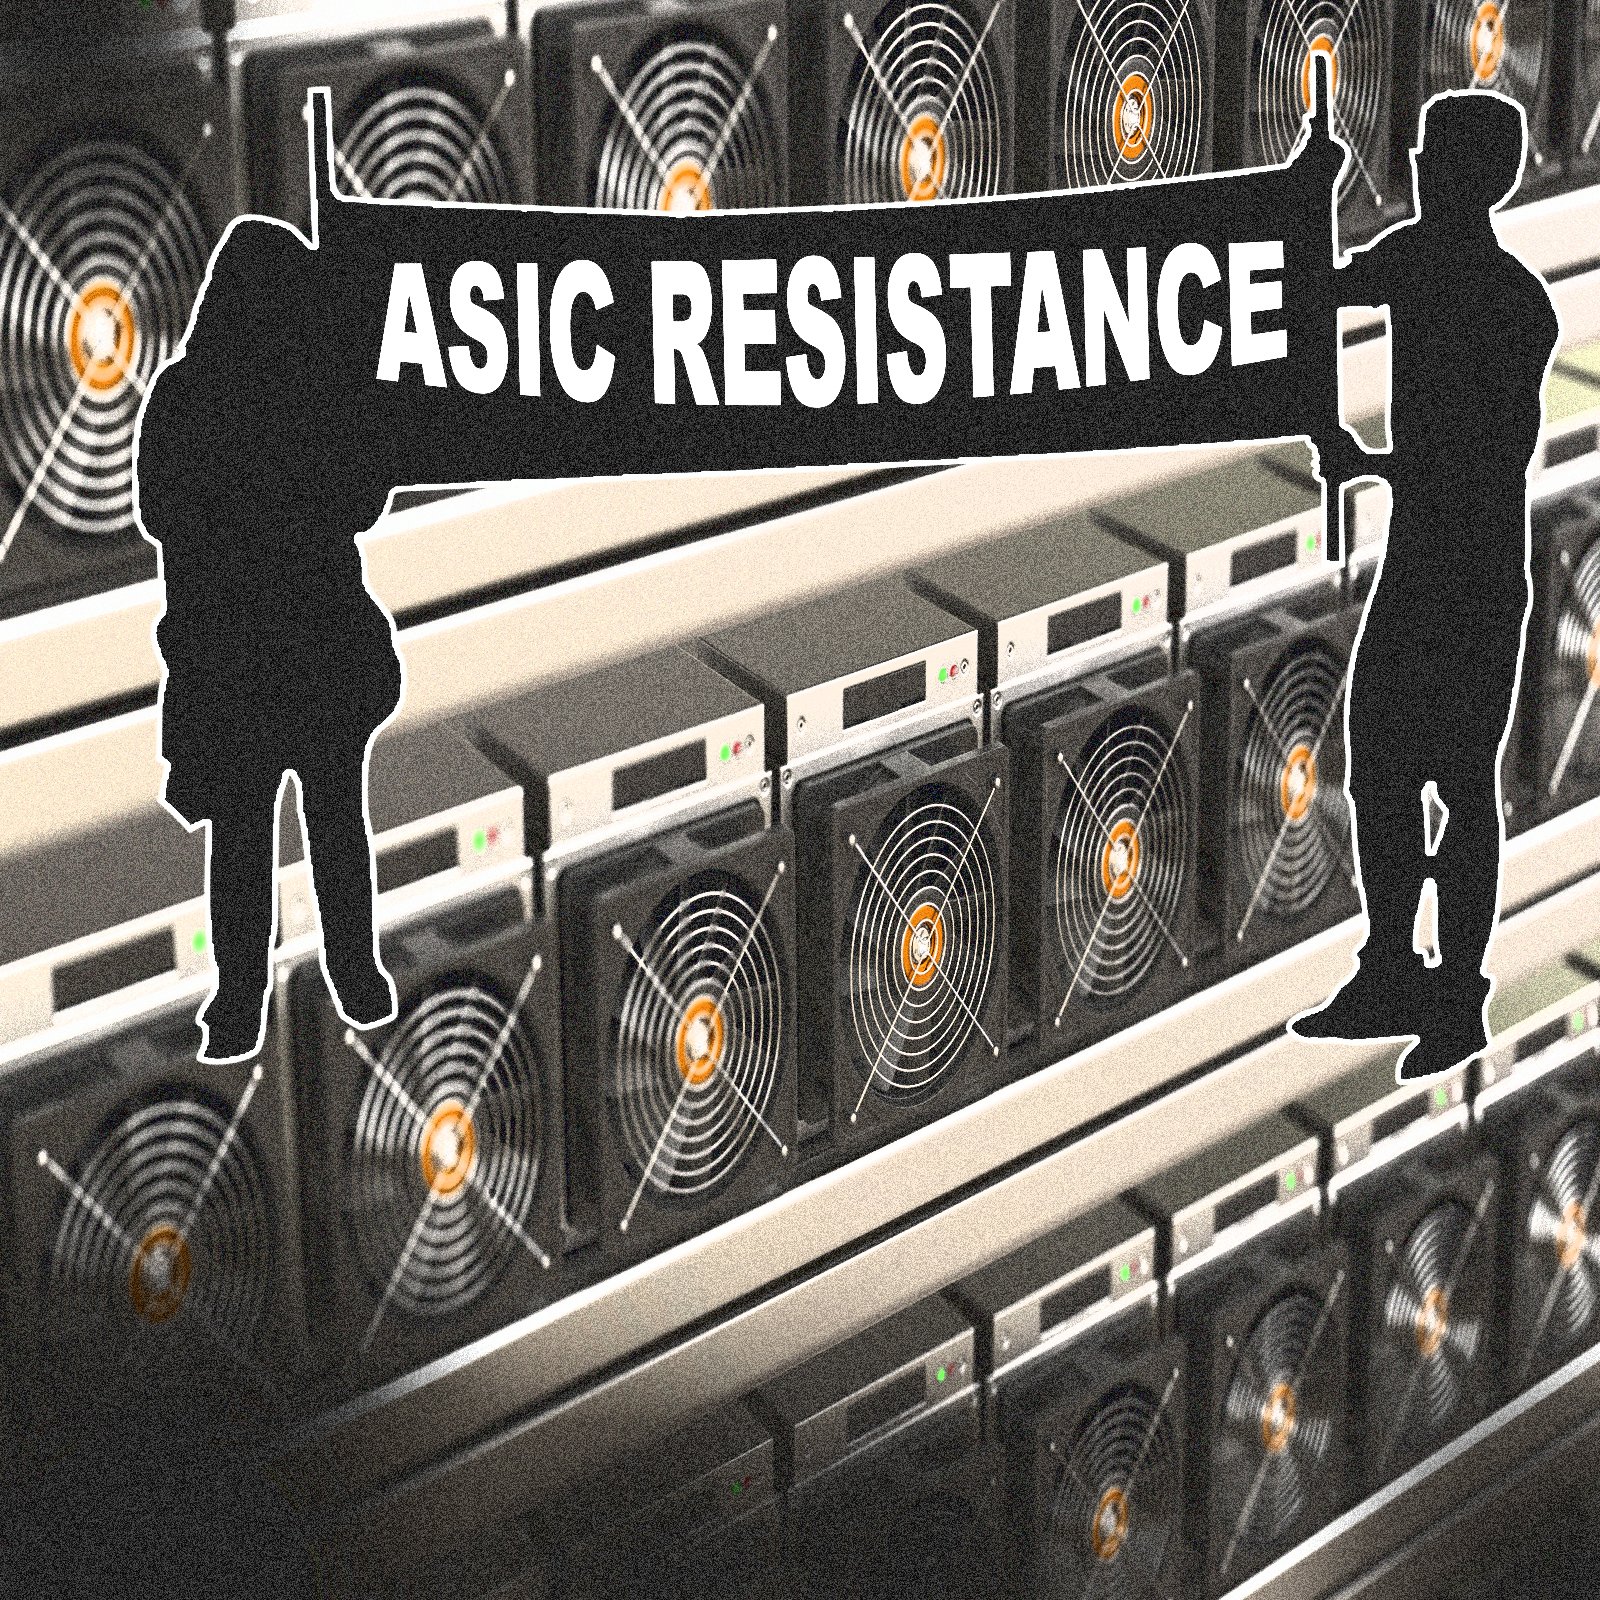 Asic resistant crypto 0293 btc usd